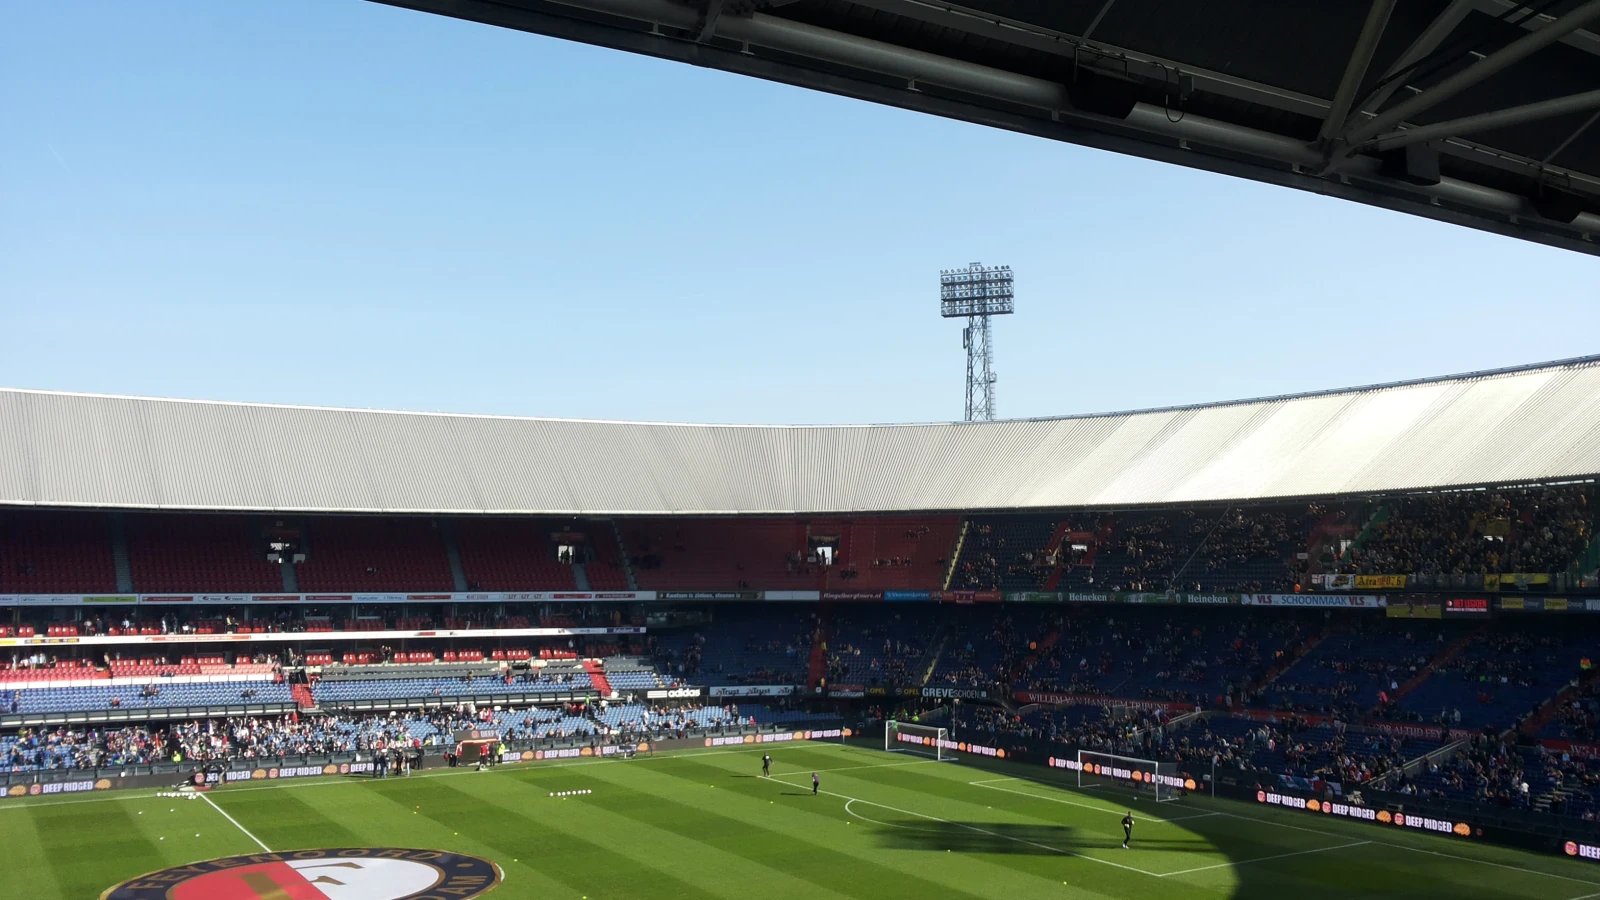 Songfestival en schema Feyenoord botsen vooralsnog niet